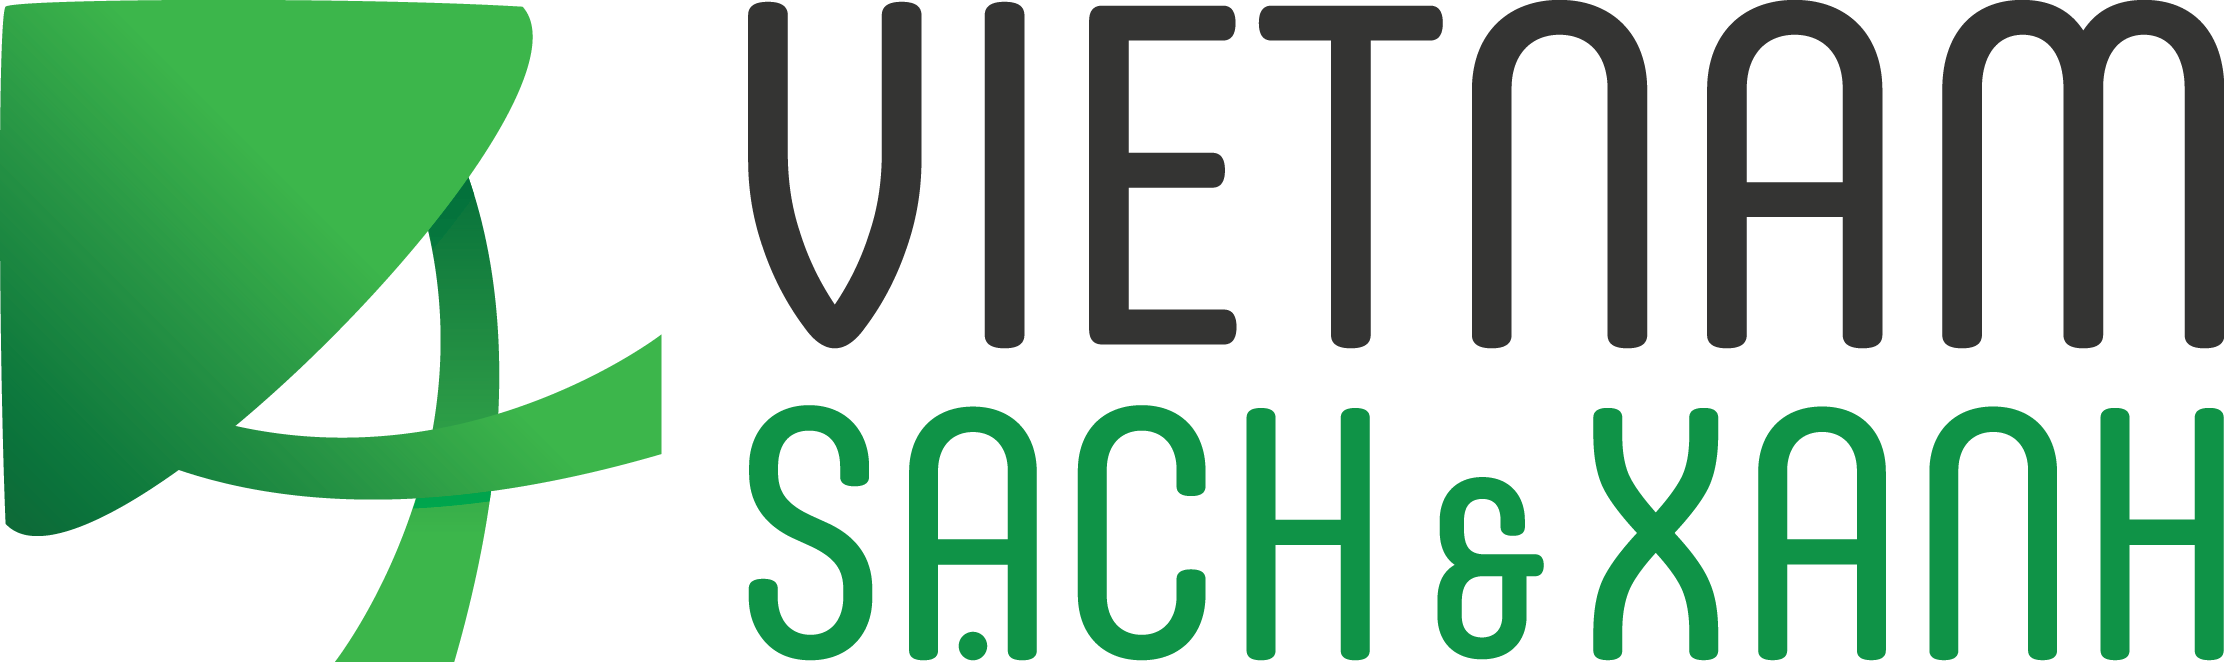 Keep It Green Logo - Keep Vietnam Clean & Green Vespa Adventures